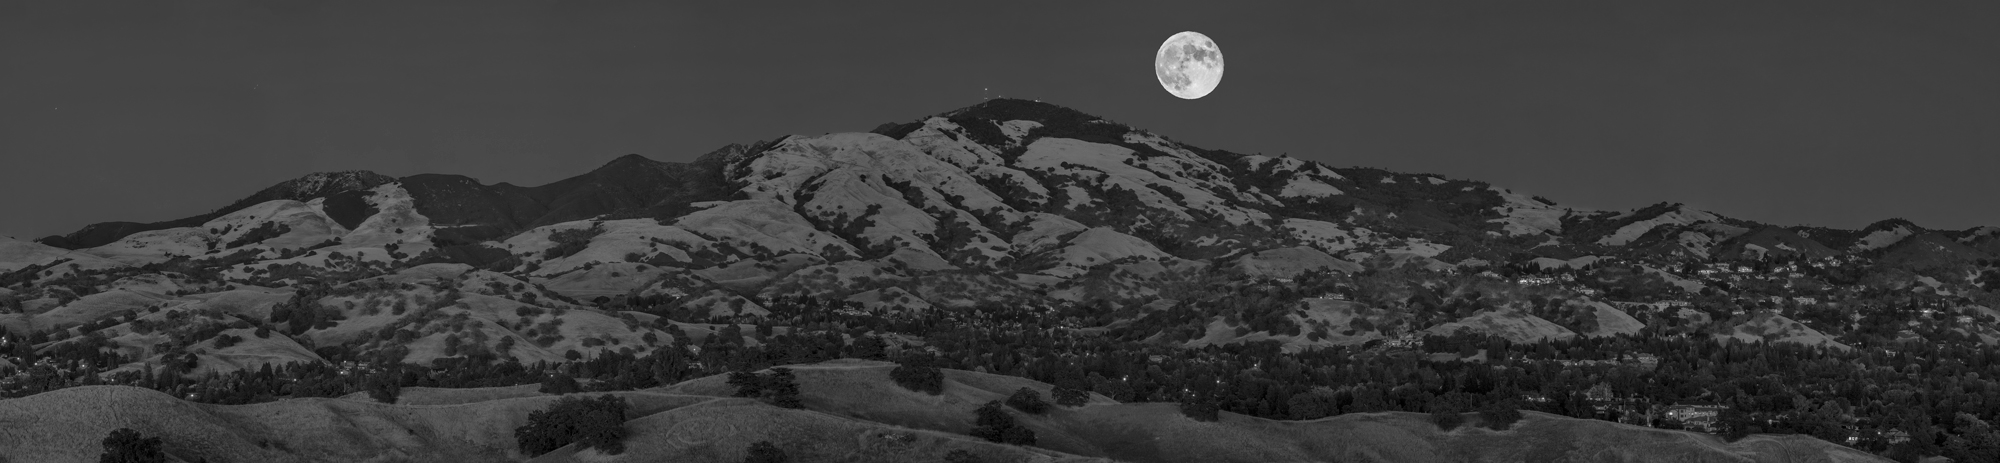 Mount Diablo Full Moonrise Alamo Walnut Creek Panorama Fine Art Landscape Photography Mark Lilly